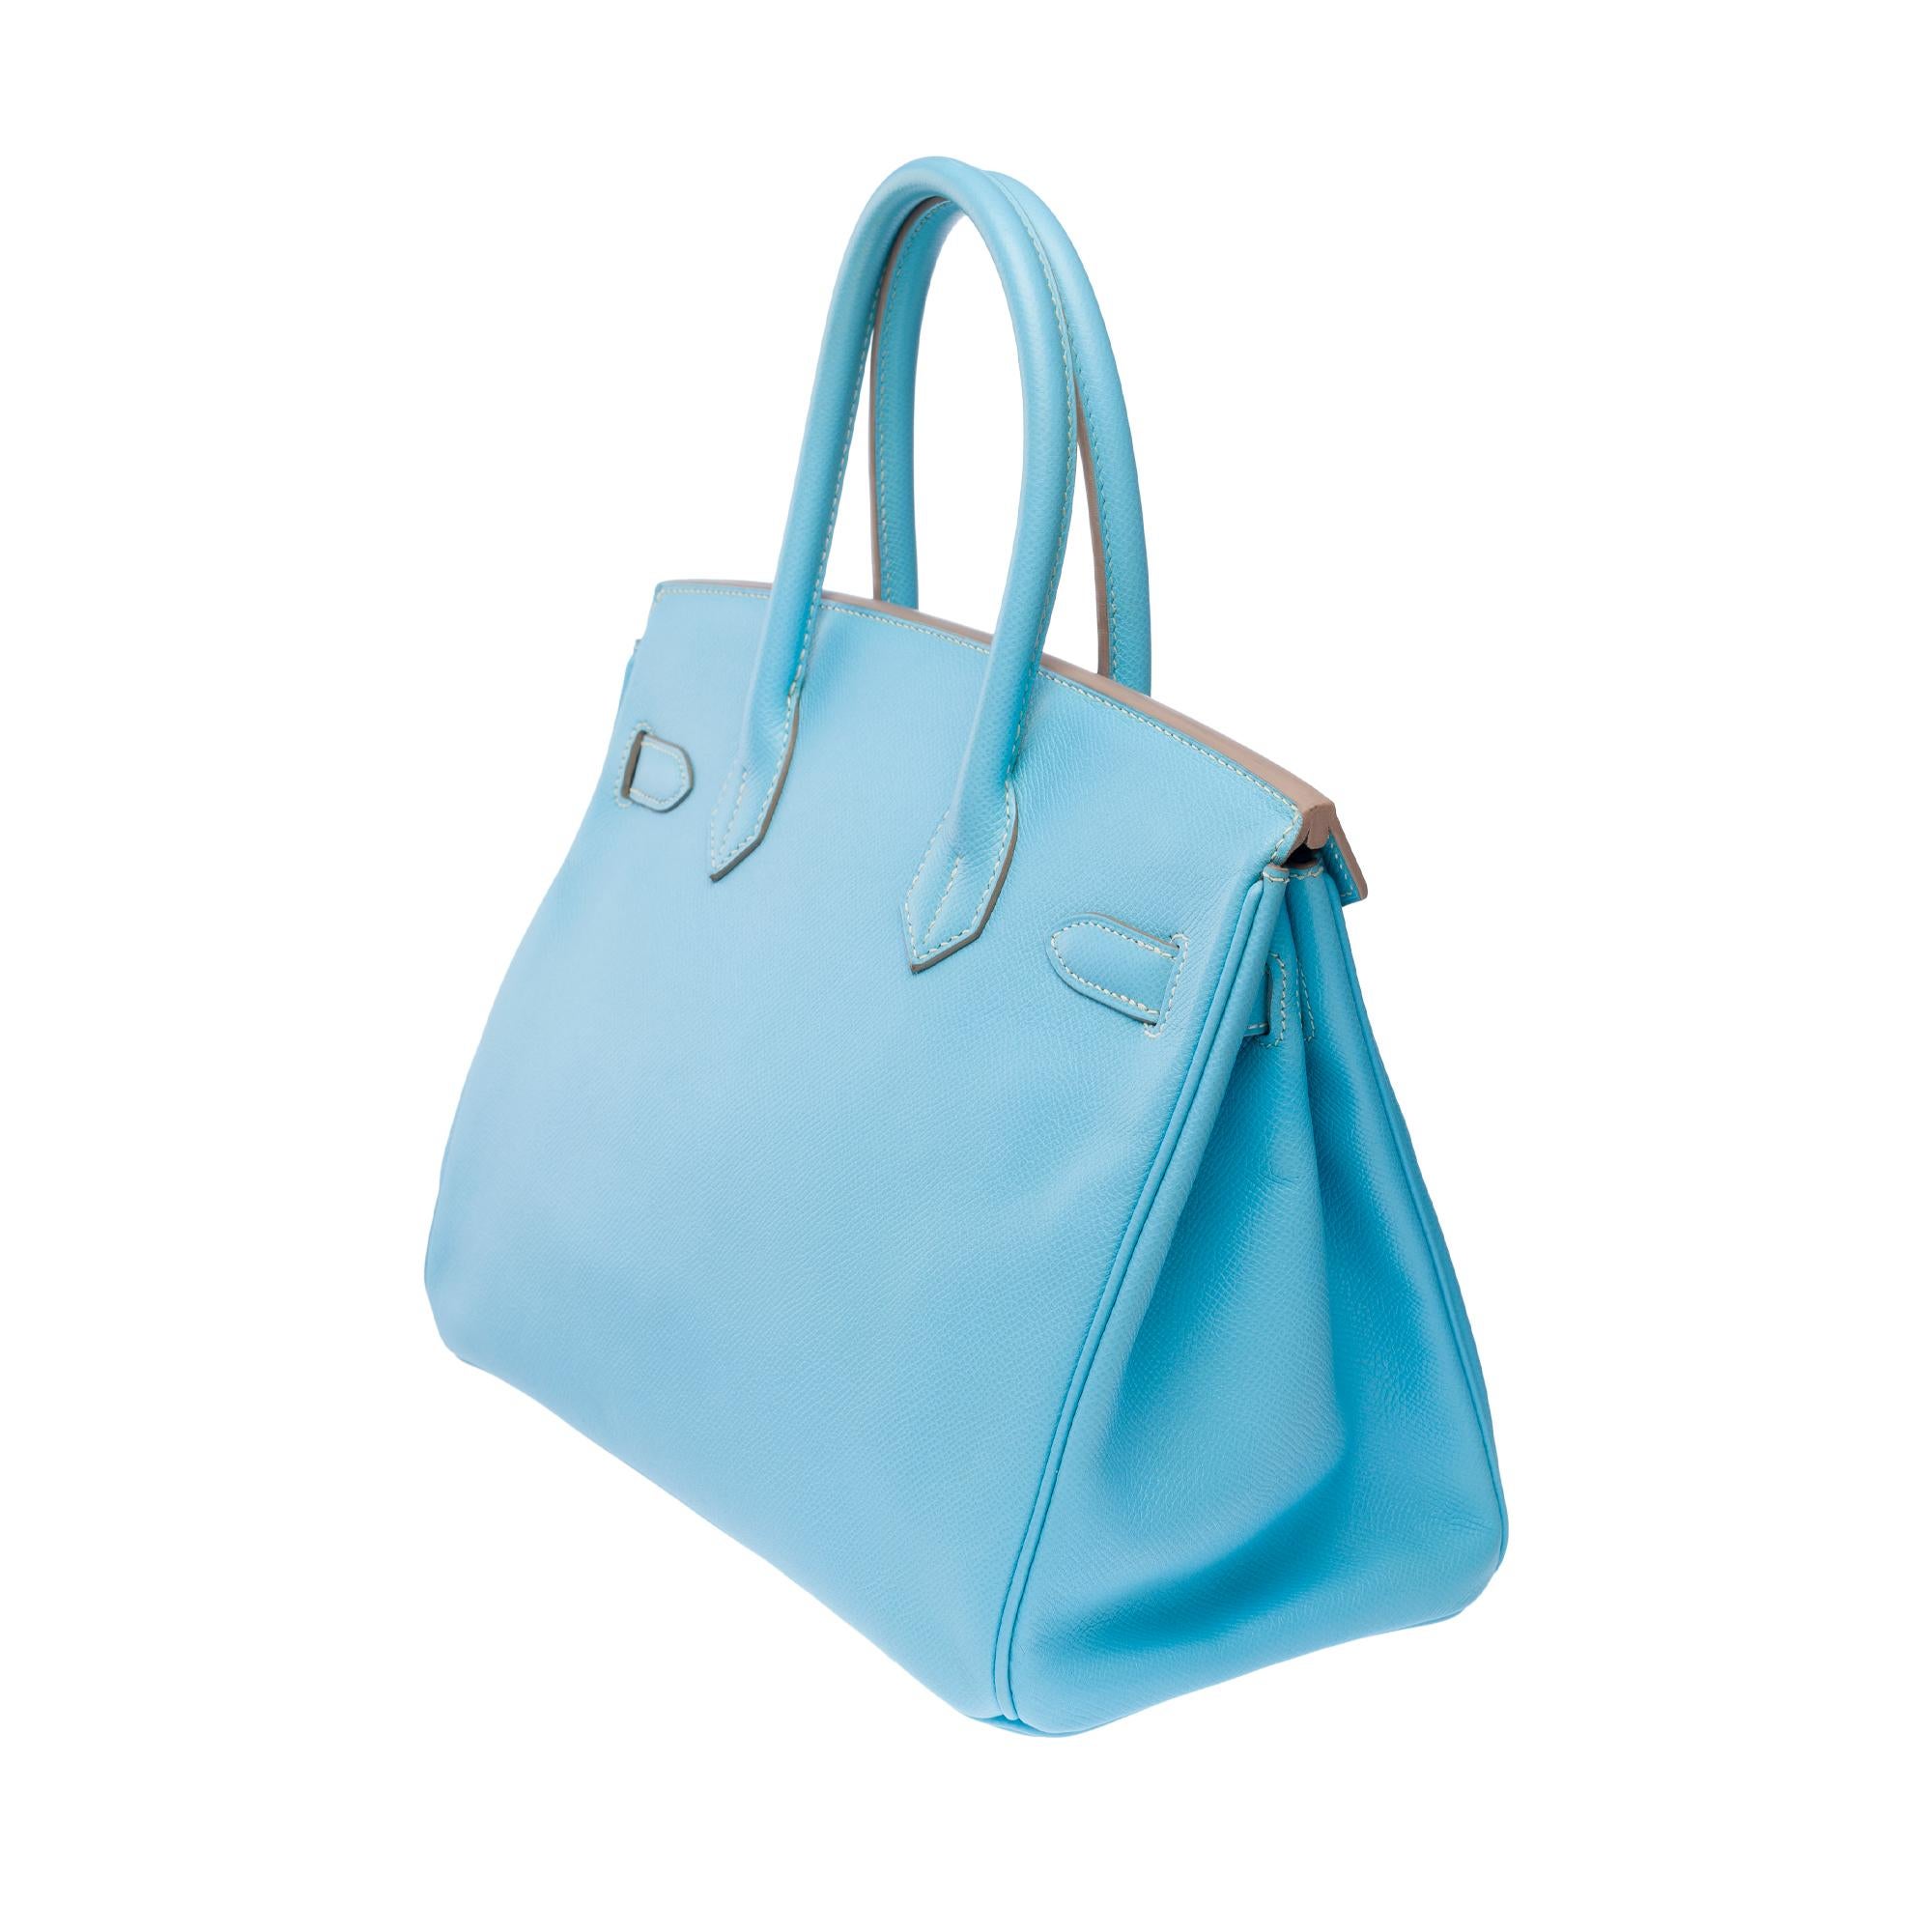 Rare Hermes Birkin 30 Candy Edition handbag in Celeste Blue Epsom leather, SHW 3